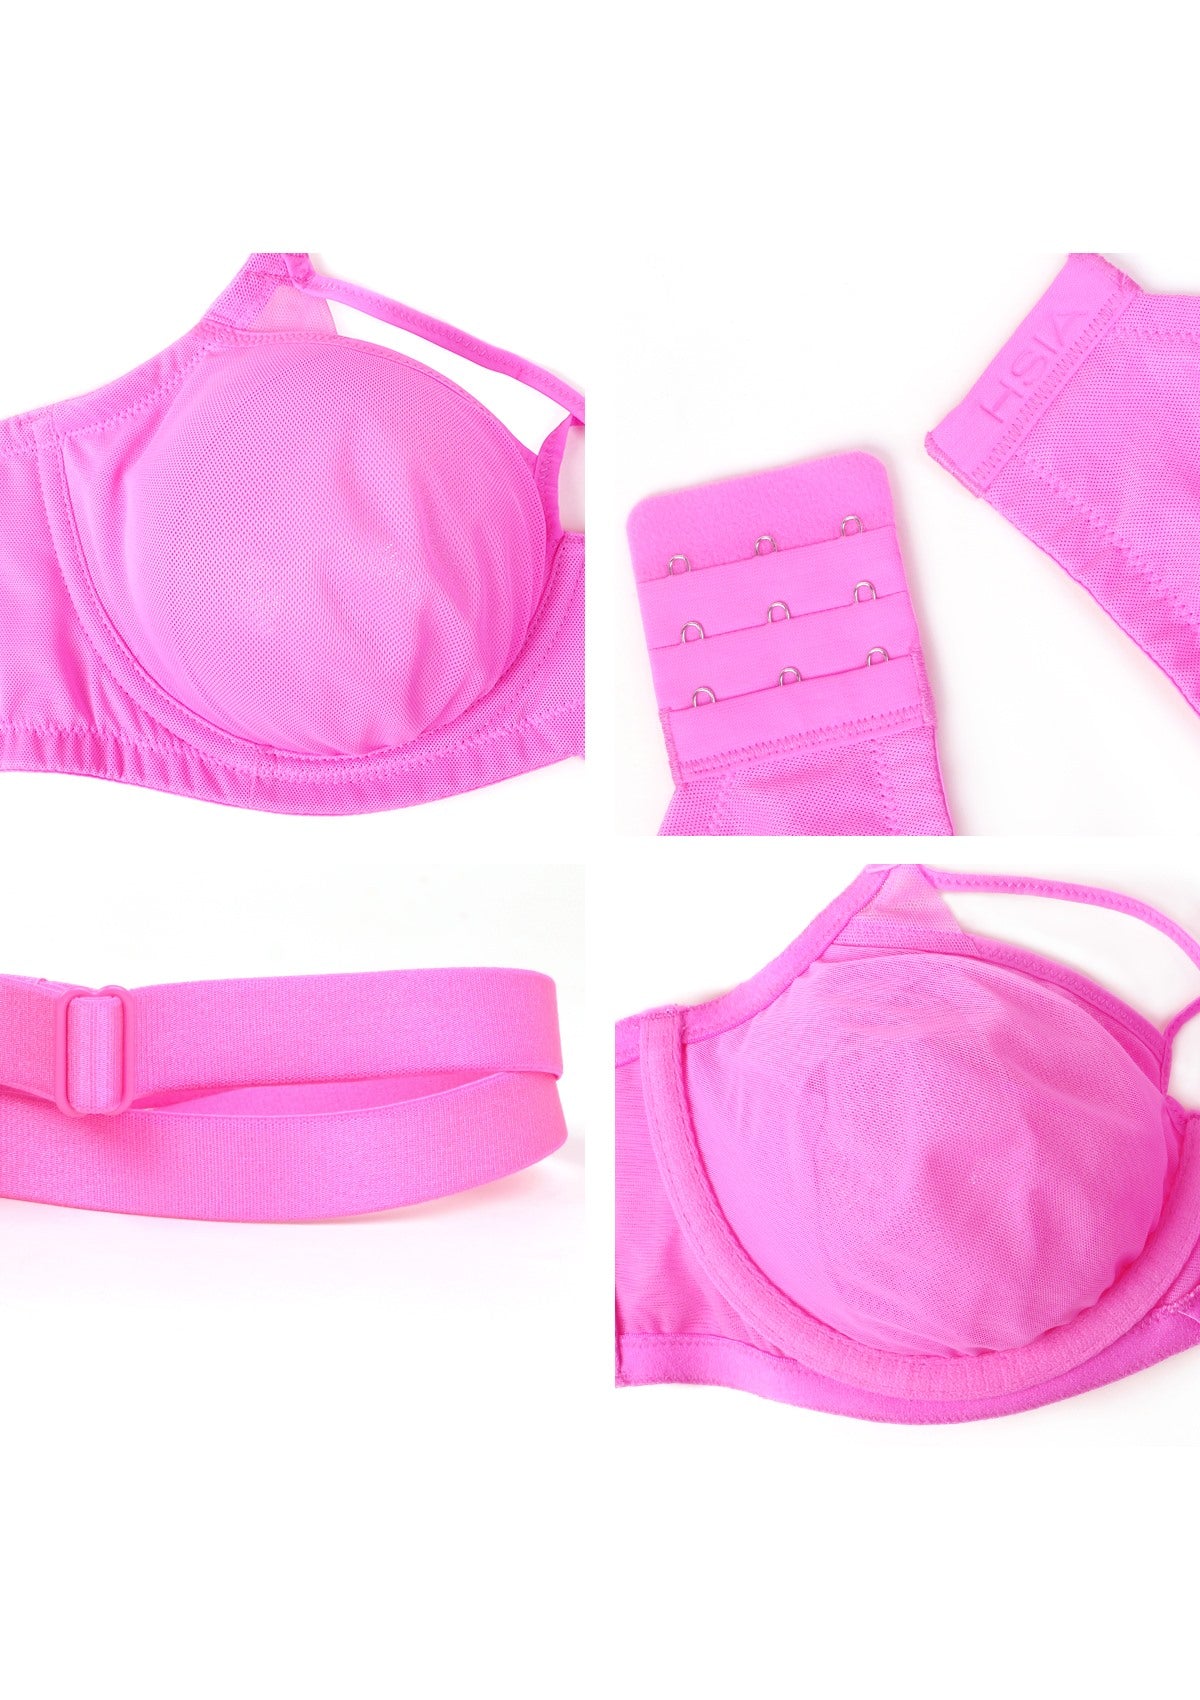 HSIA Billie Cross Front Strap Smooth Sheer Mesh Comfy Underwire Bra - Barbie Pink / 42 / DDD/F